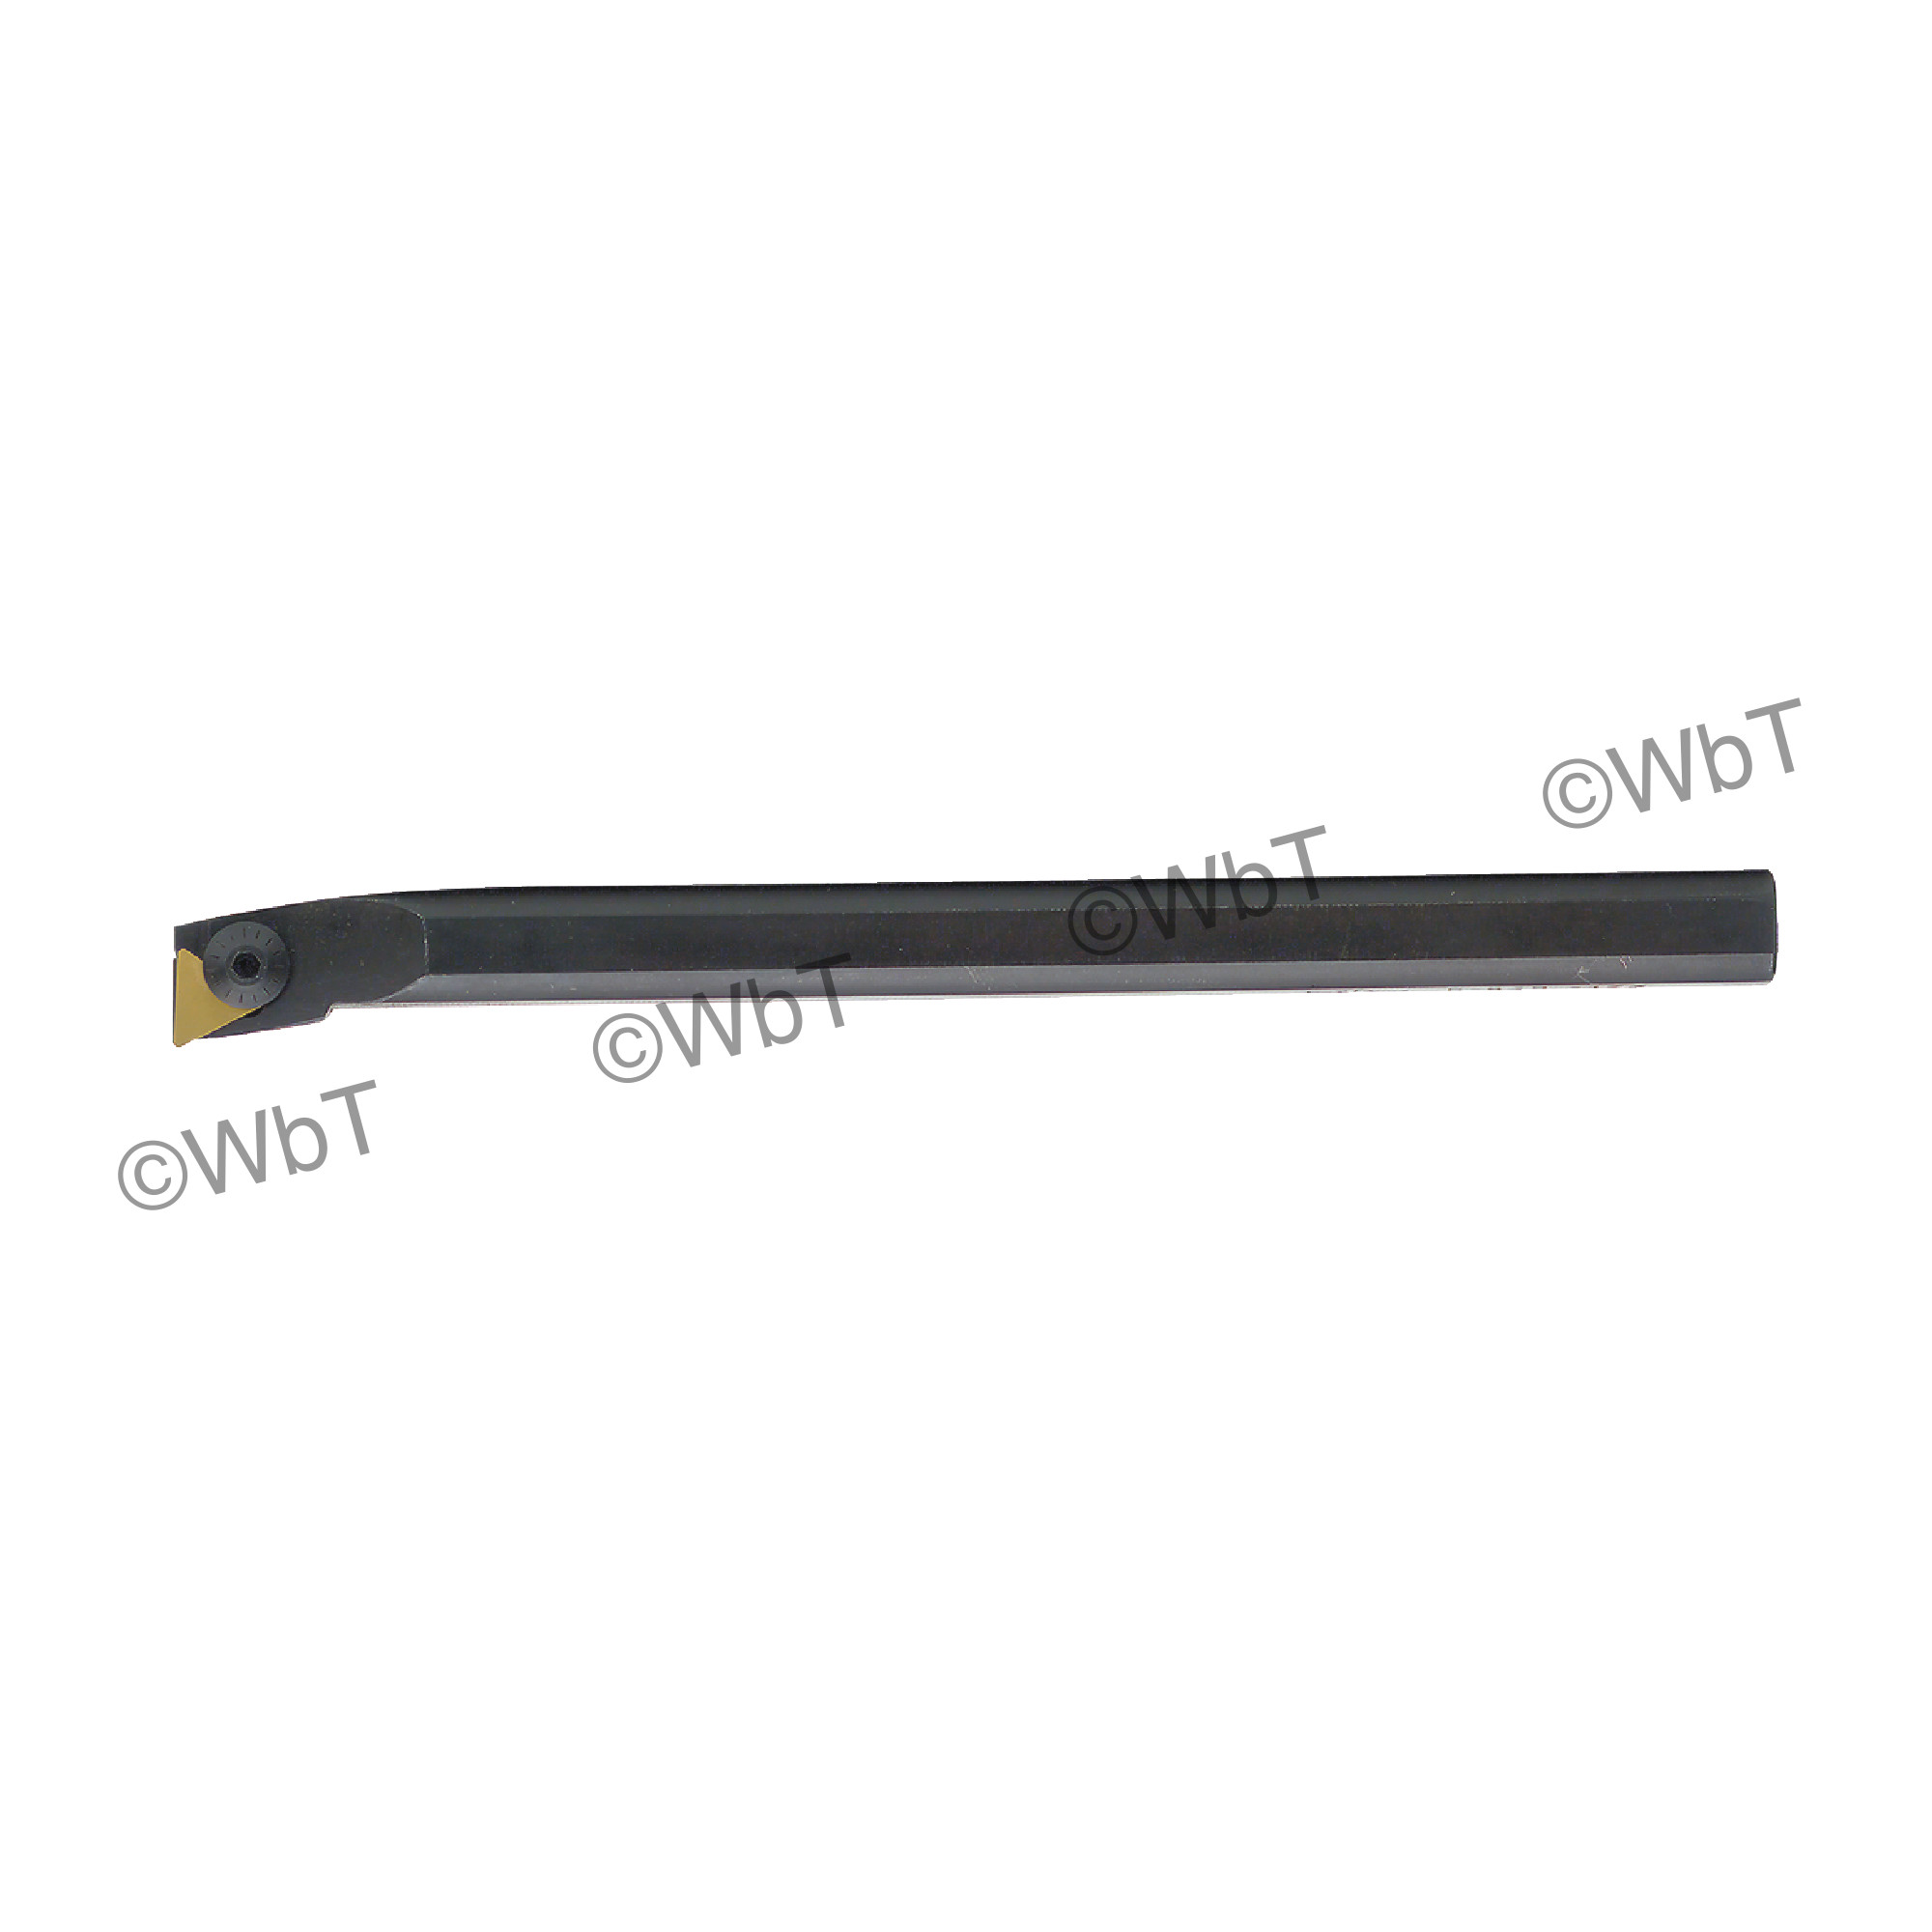 TTC PRODUCTION - T-6-939-176 / Steel Boring Bar / 1.500" Shank / TPG43_ / Right Hand